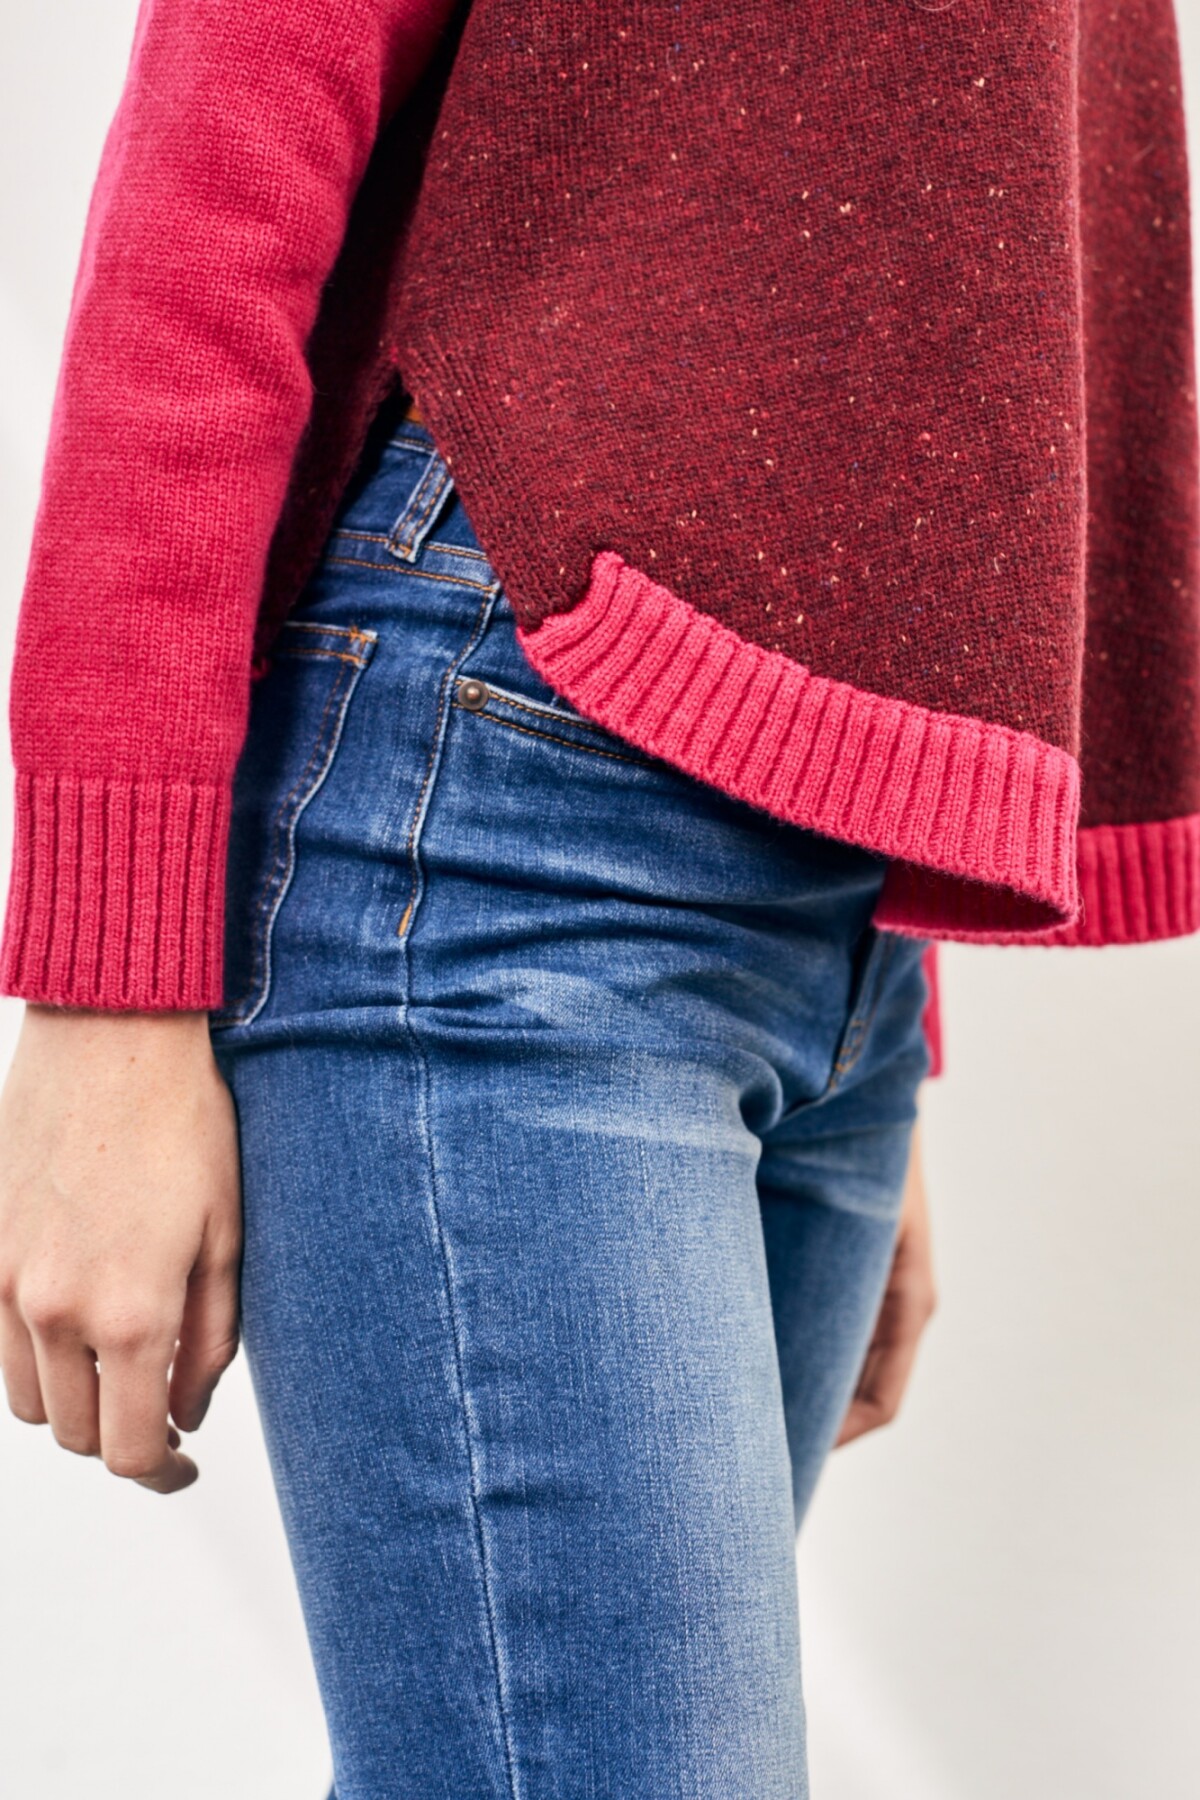 Sweater Color Block Magenta